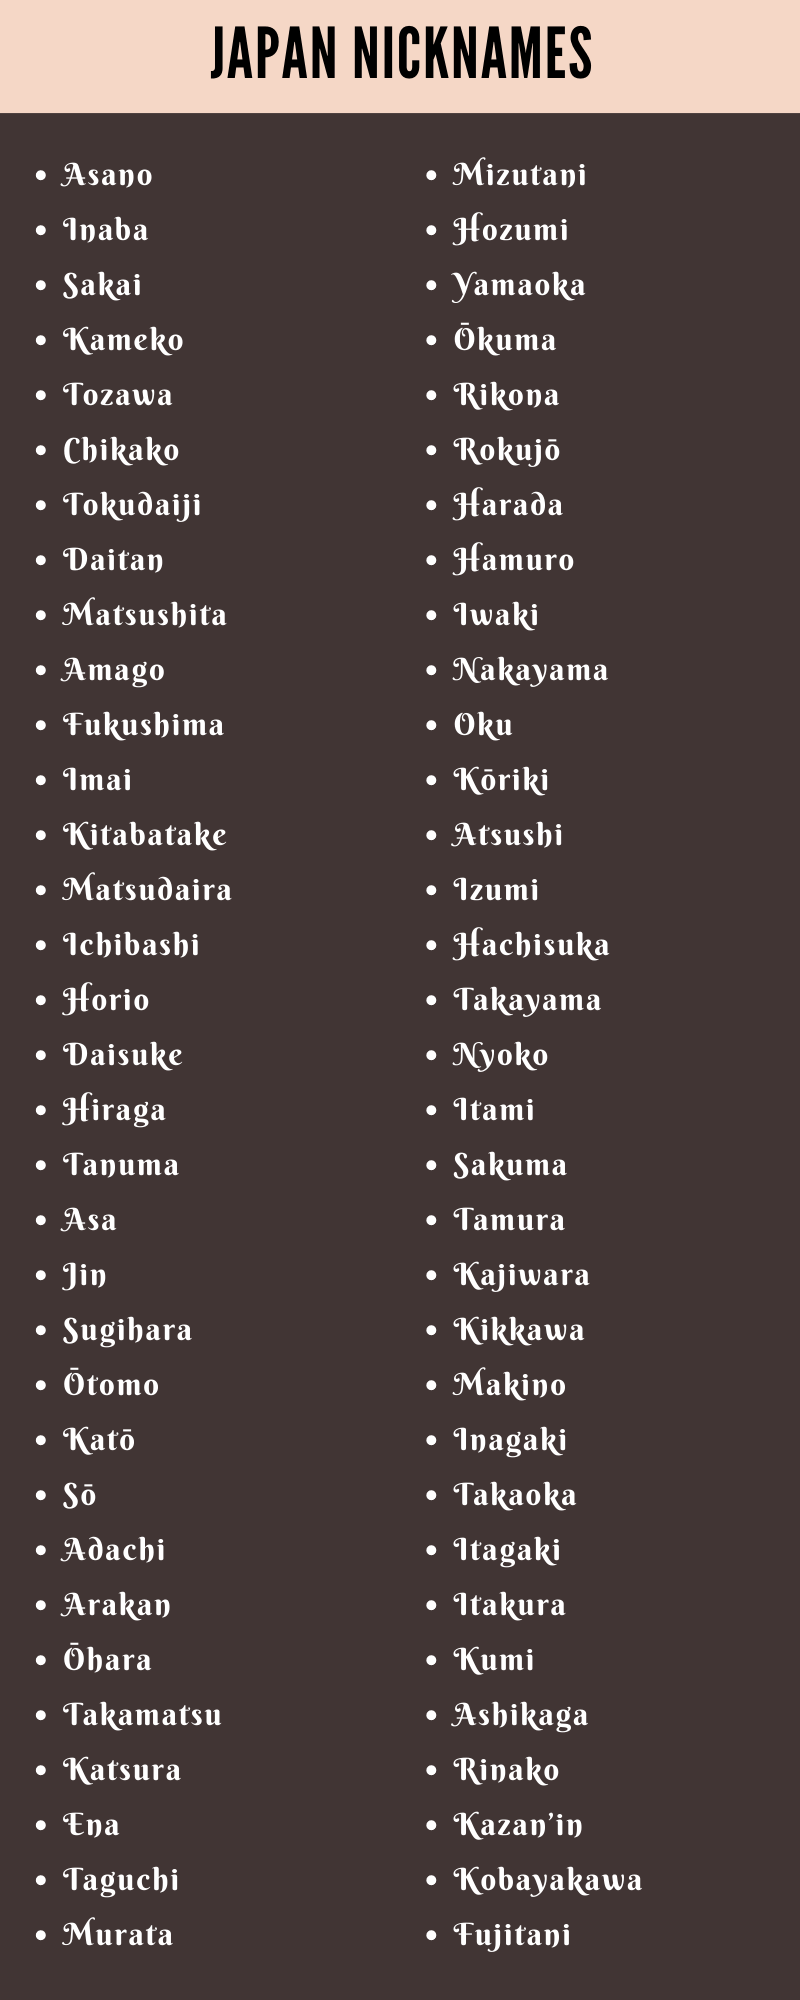 Japan Nicknames